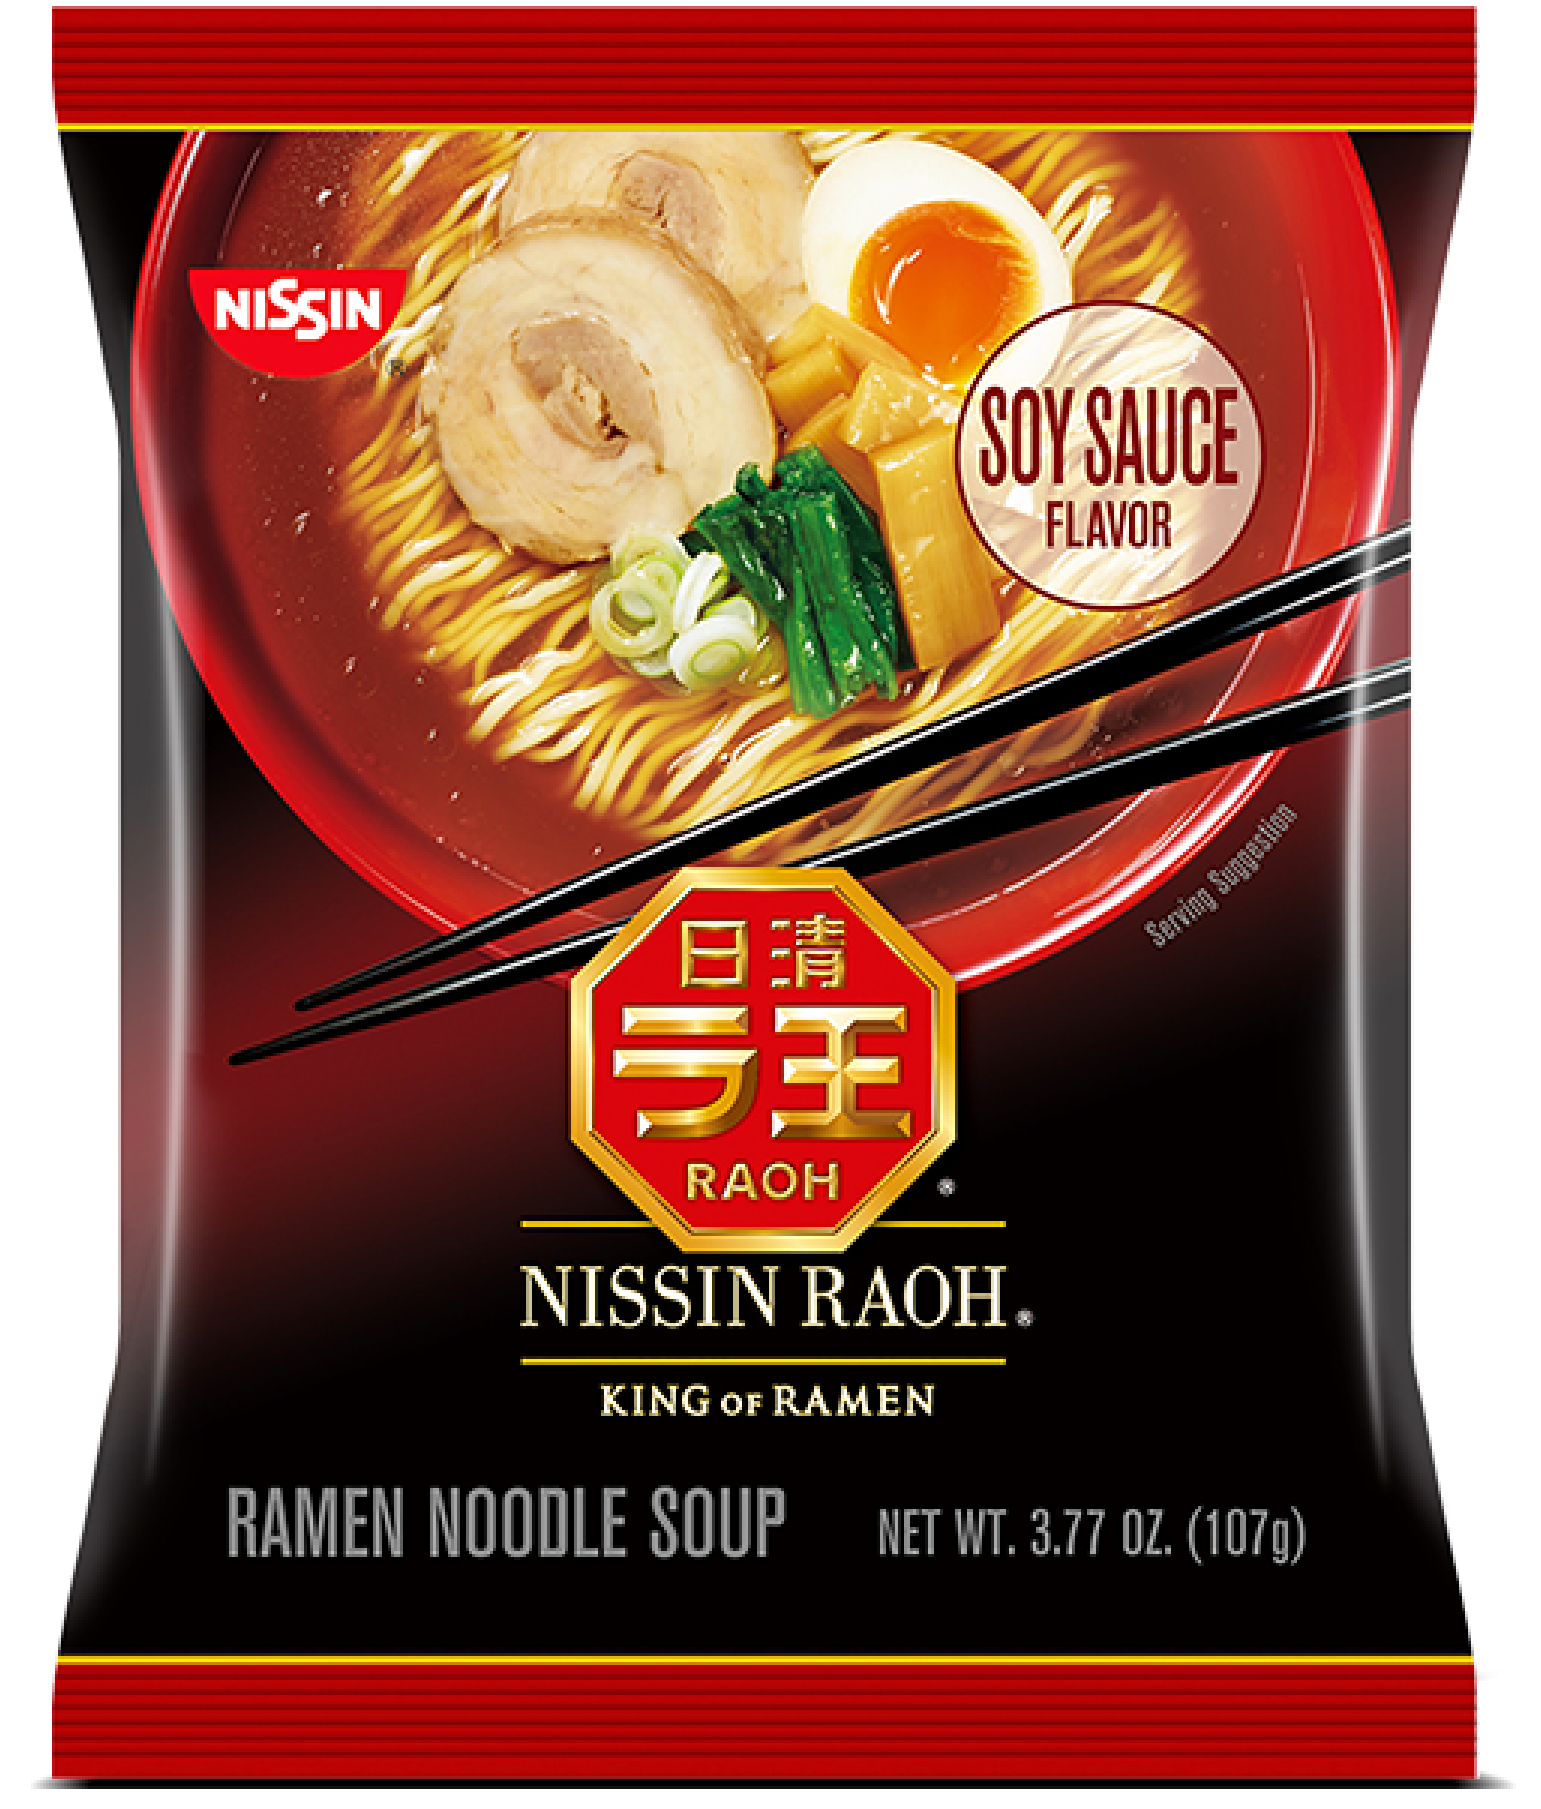 Nissin Foods - Wikipedia